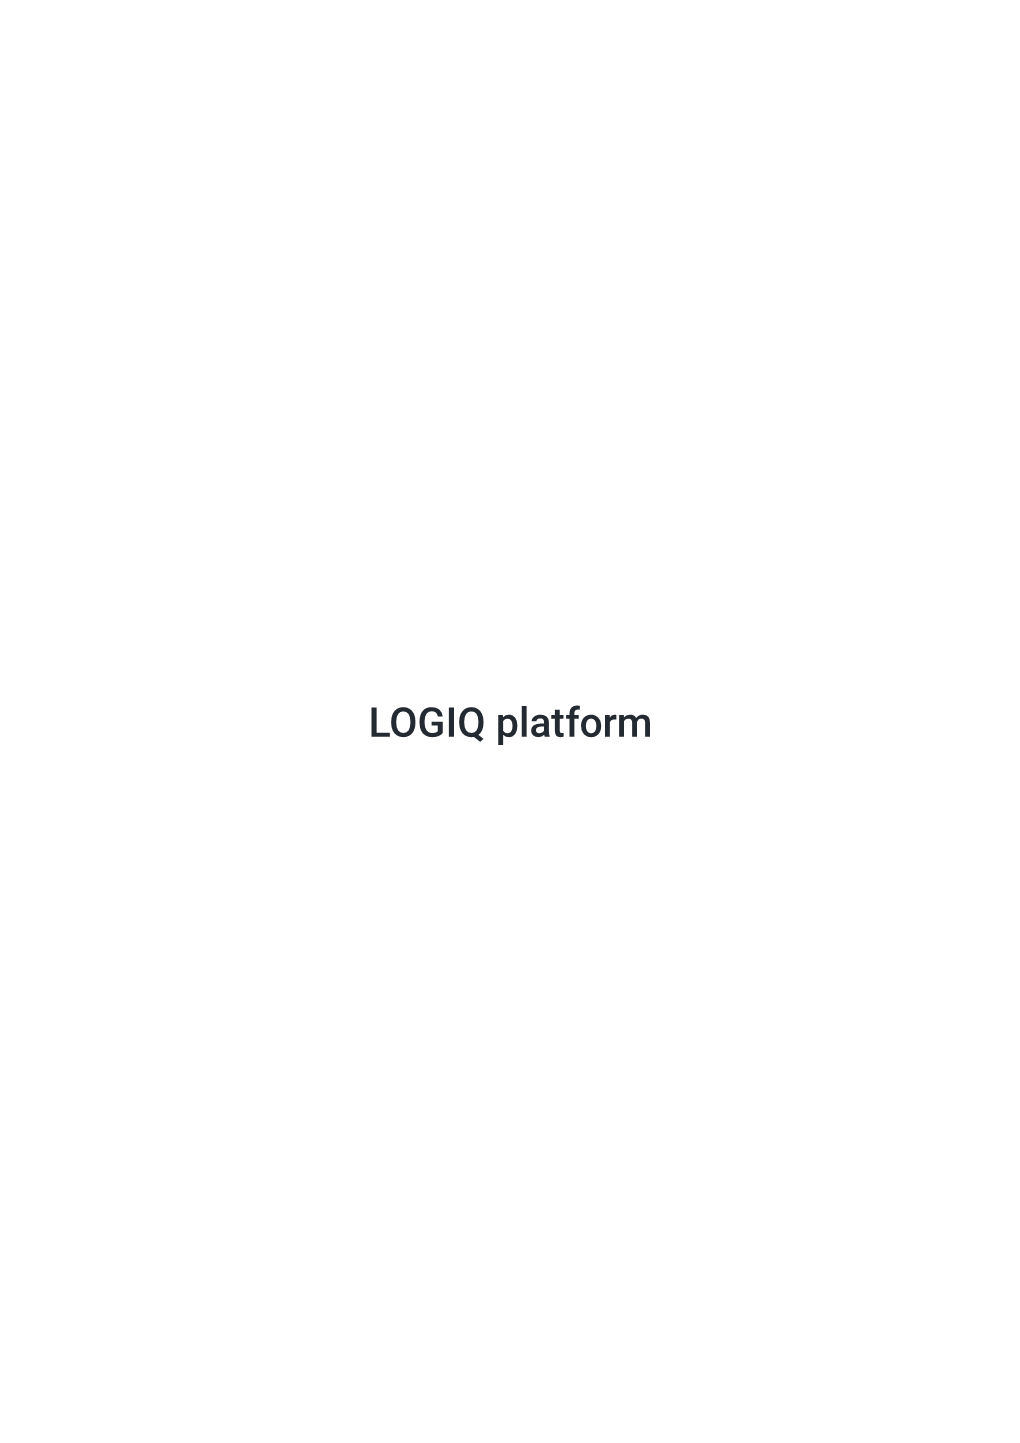 LOGIQ Platform Overview